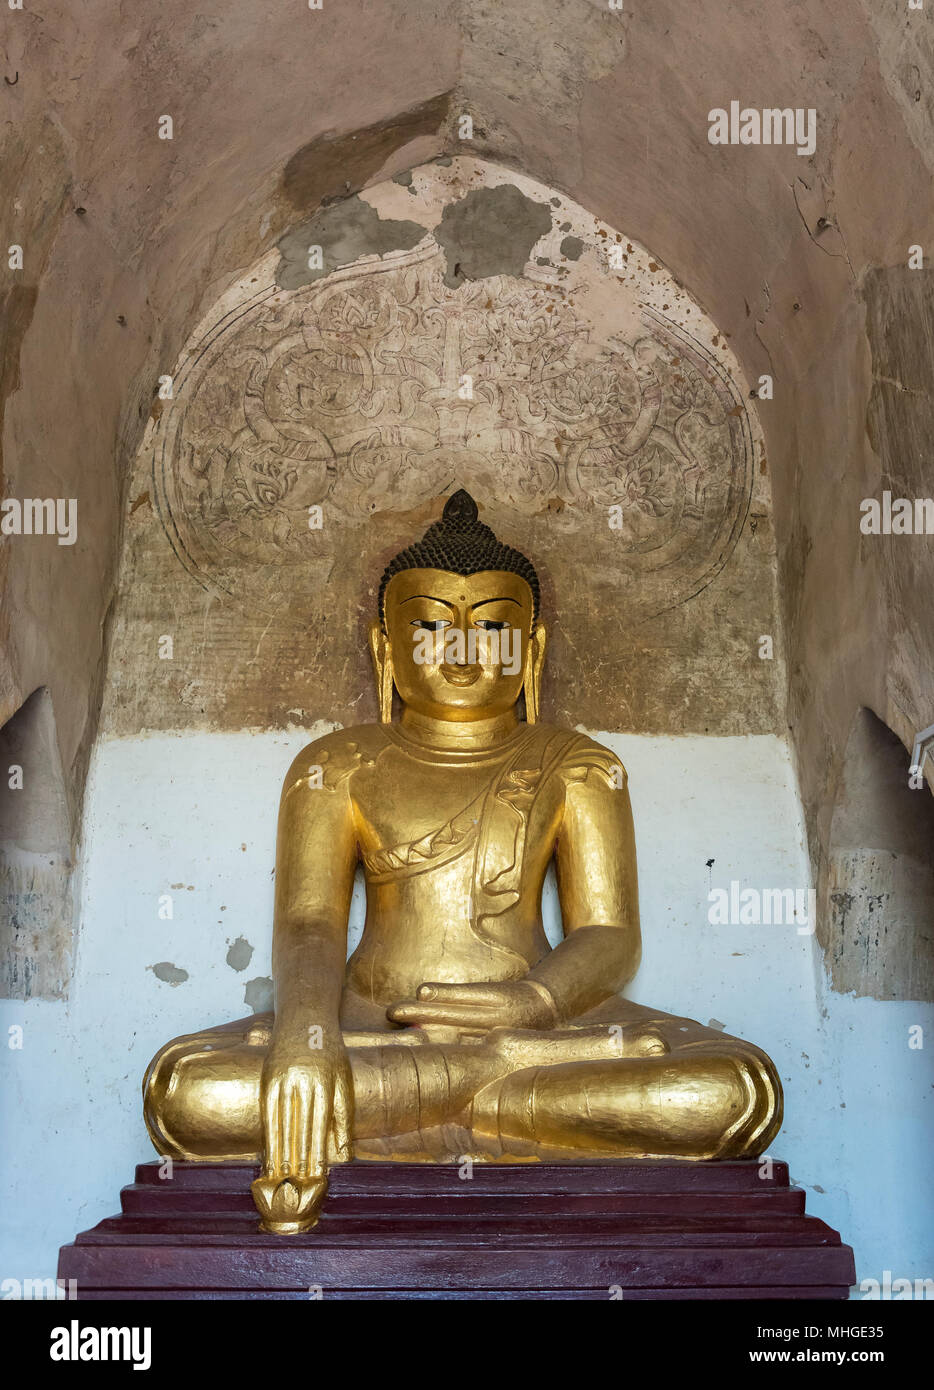 Statue de Bouddha au temple Gawdawpalin (Gaw Daw Palin Paya), Old Bagan, Myanmar (Birmanie) Banque D'Images